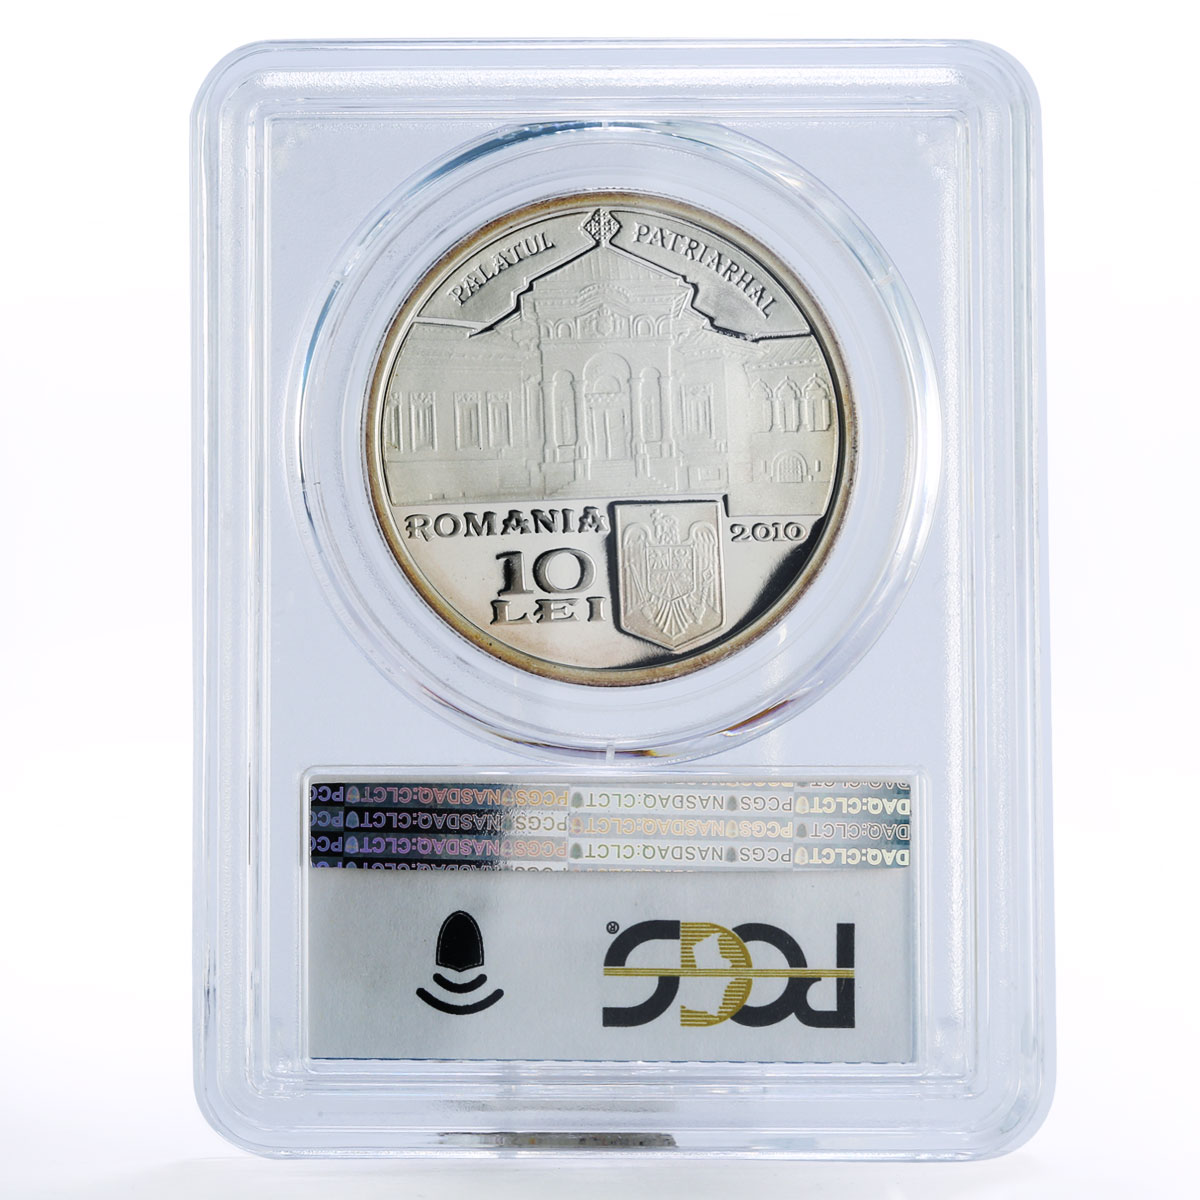 Romania 10 lei Romanian Orthodox Iustin Moisescu PR69 PCGS silver coin 2010